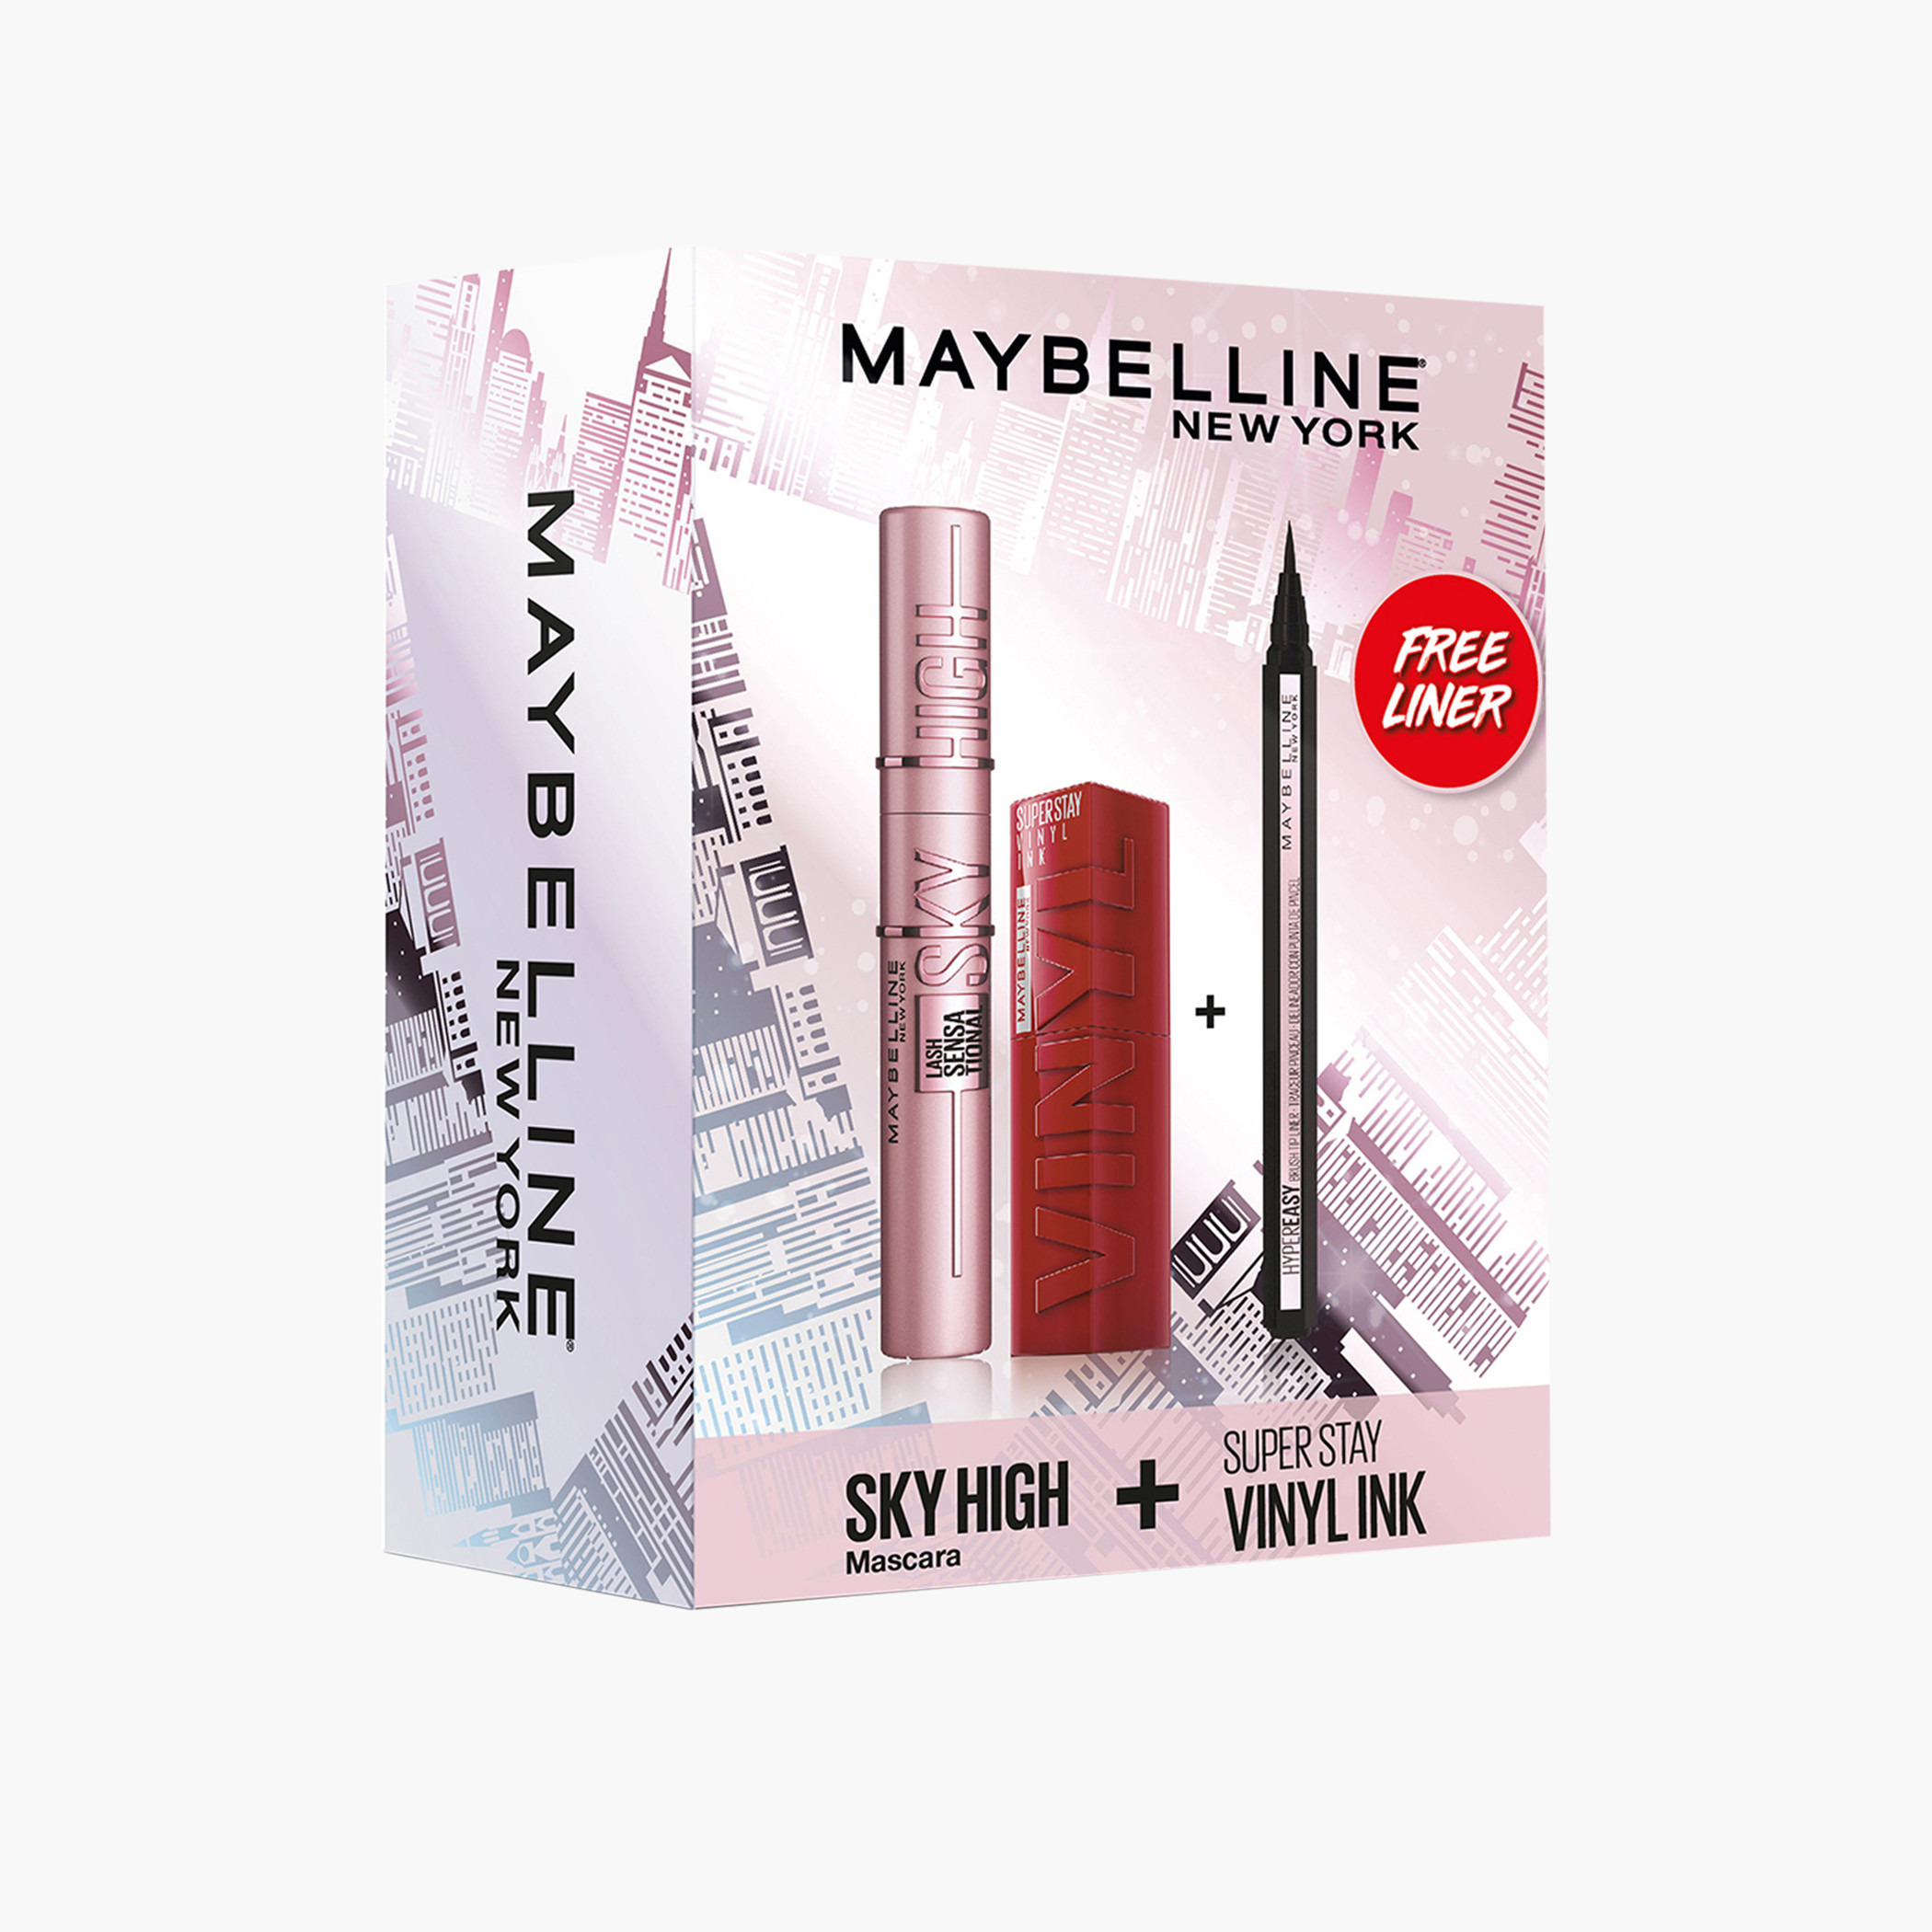 Maybelline 6x piece Makeup Kit 'Jet Setter', Primer, Mascara, Lipstick, Lip  Balm, Liquid Blush & Micellar Water Set, Travel Kit, For Cosmetic Lovers!  Dimensions… | Maybelline makeup kit, Makeup kit, Maybelline makeup